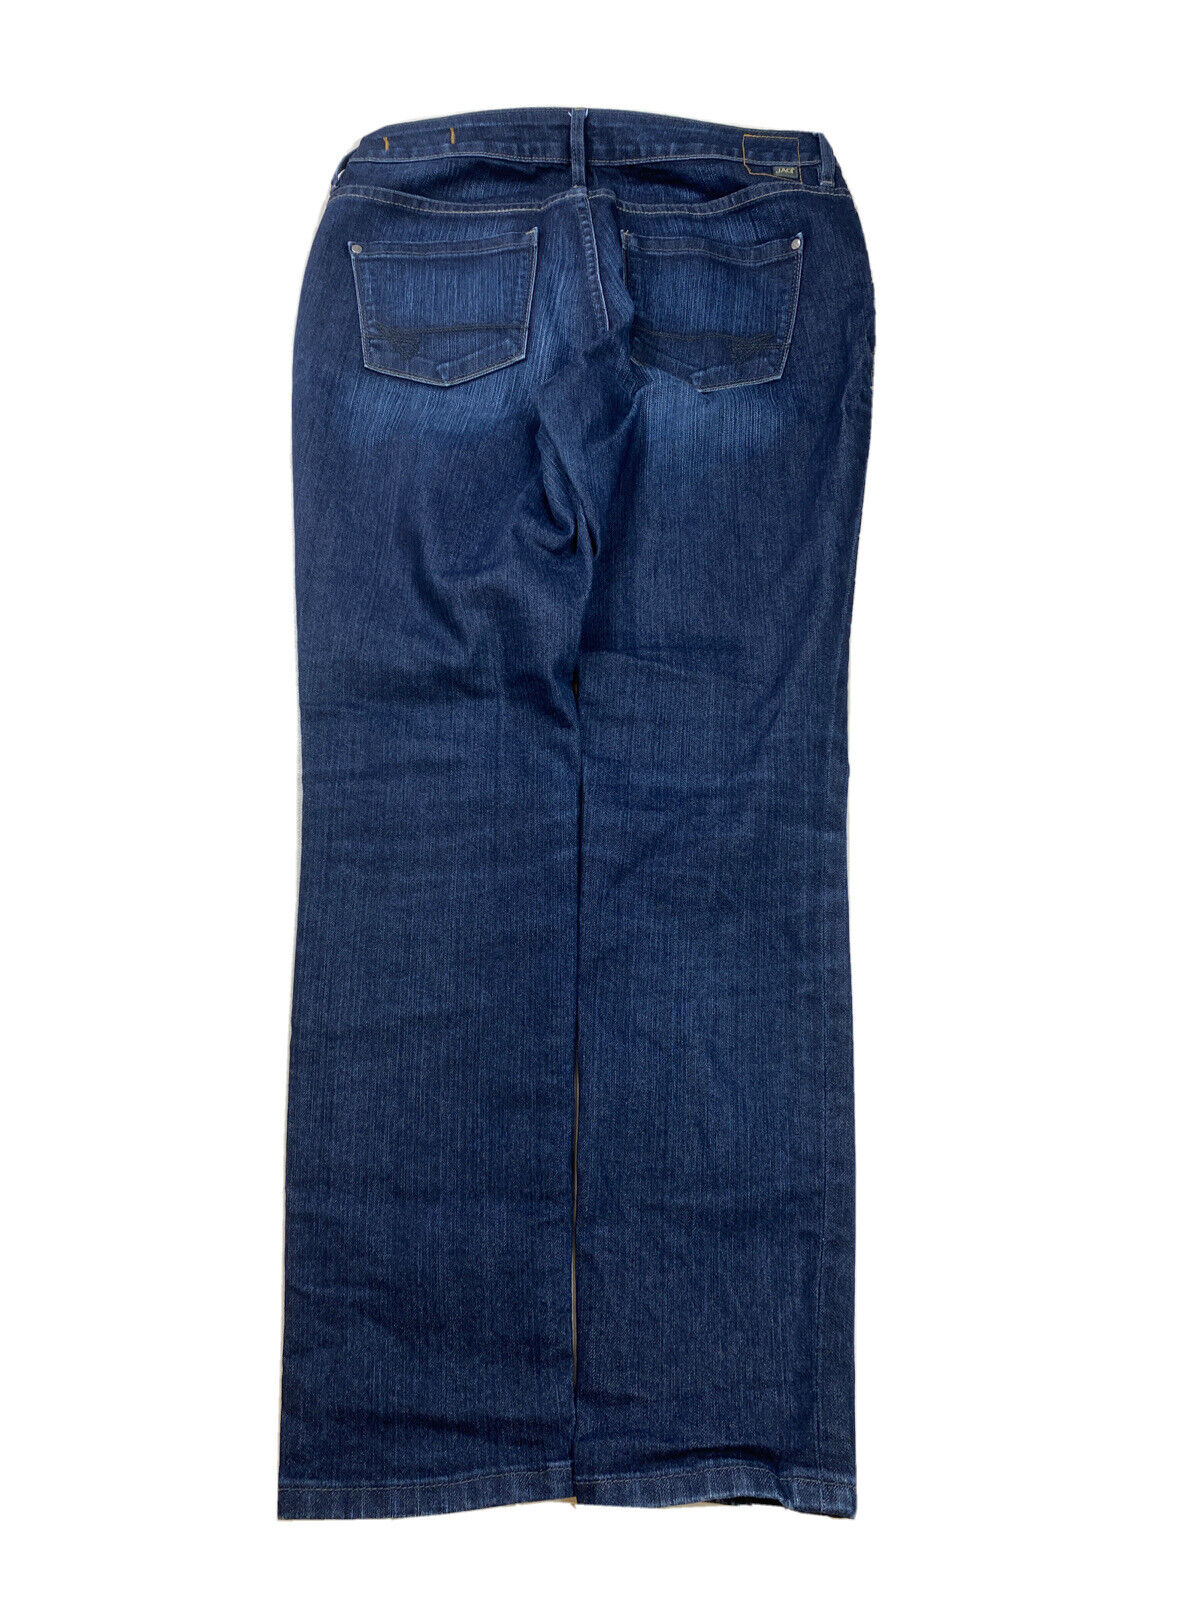 Jag Jeans Women's Dark Wash Stretch Denim Skinny Jeans - Petite 8P